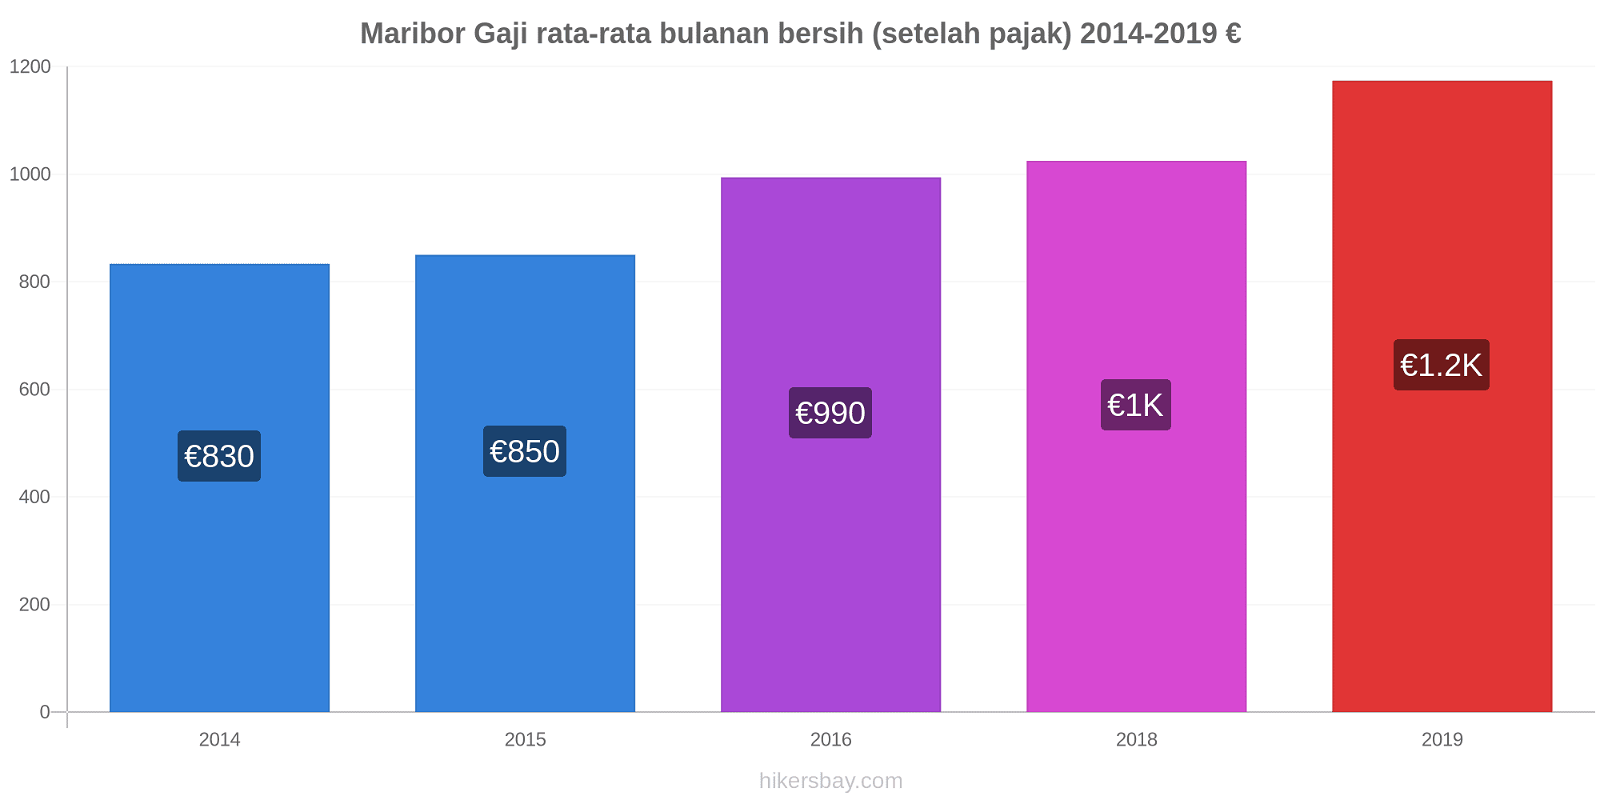 Maribor perubahan harga Gaji rata-rata bulanan bersih (setelah pajak) hikersbay.com